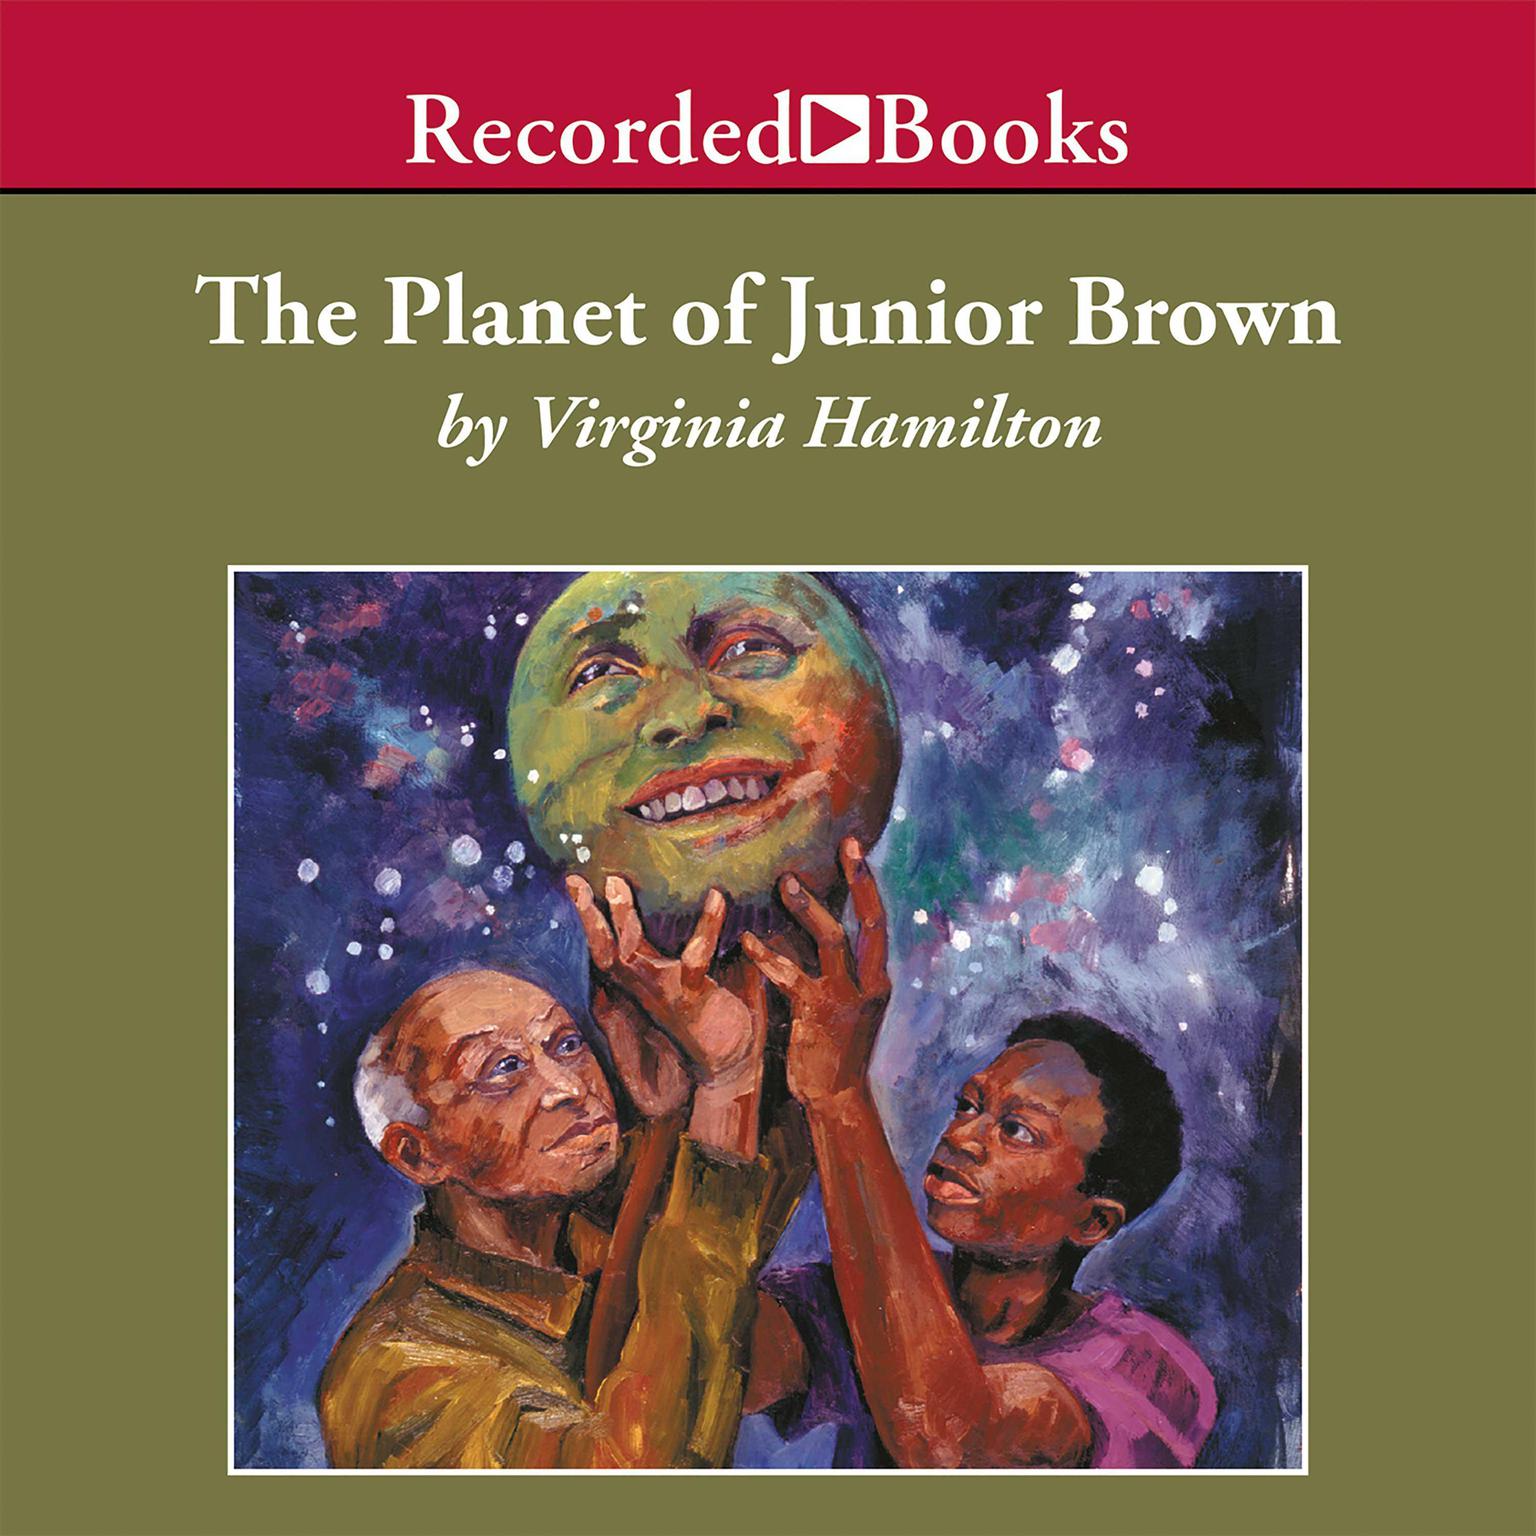 The Planet of Junior Brown Audiobook, by Virginia Hamilton